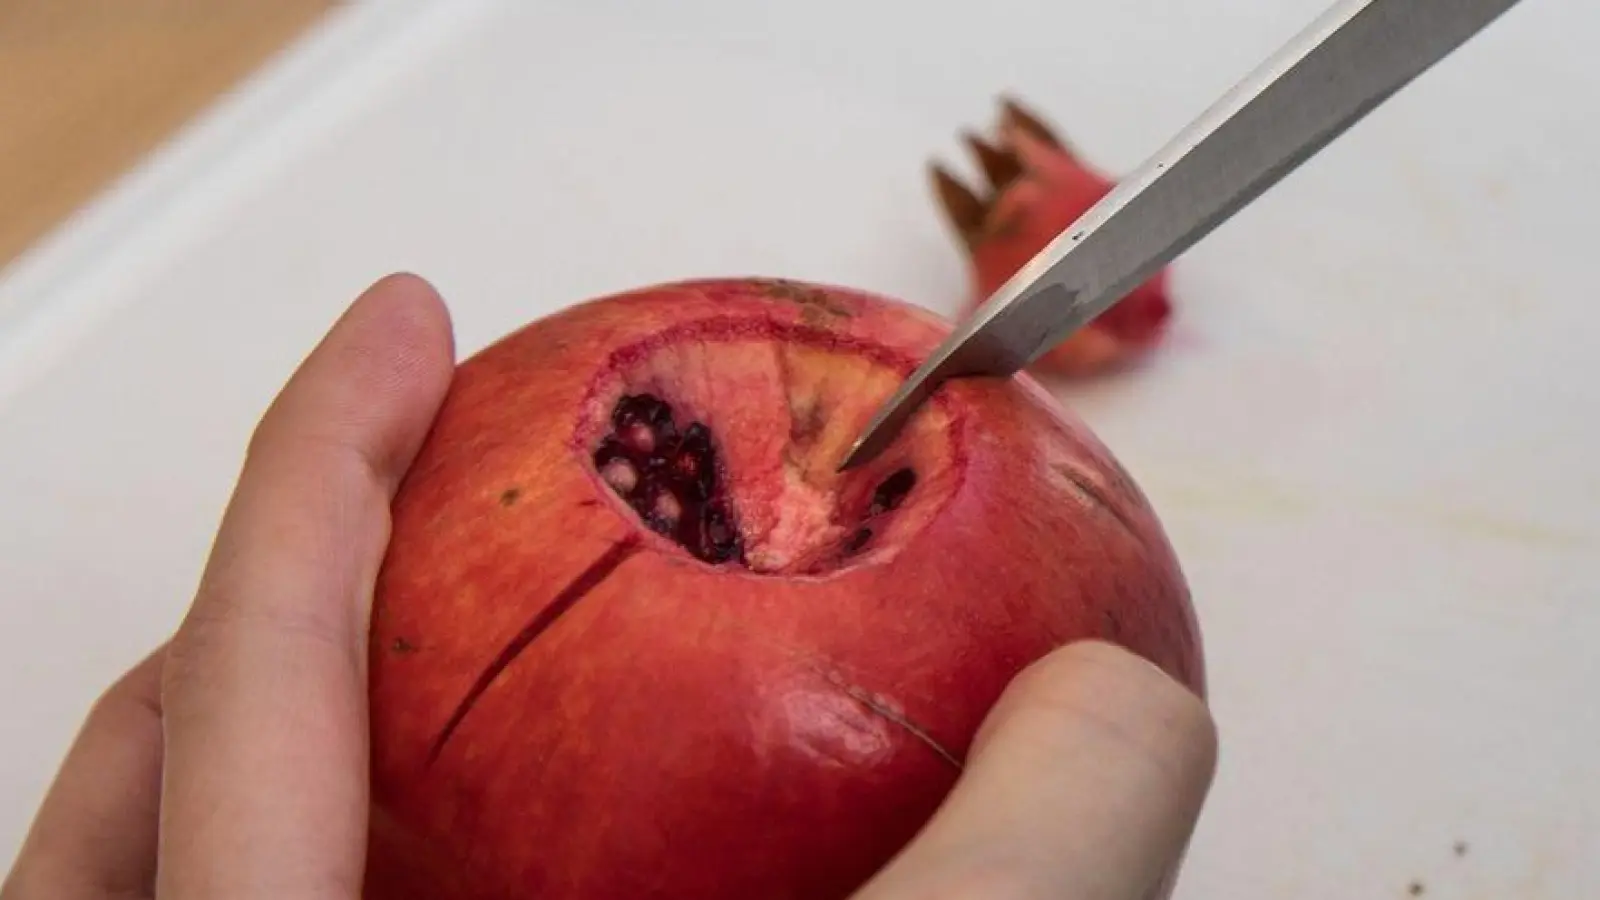 Ran an den Granatapfel: Erst kommt das Messer, dann das Wasserbad. (Foto: Christin Klose/dpa-tmn)